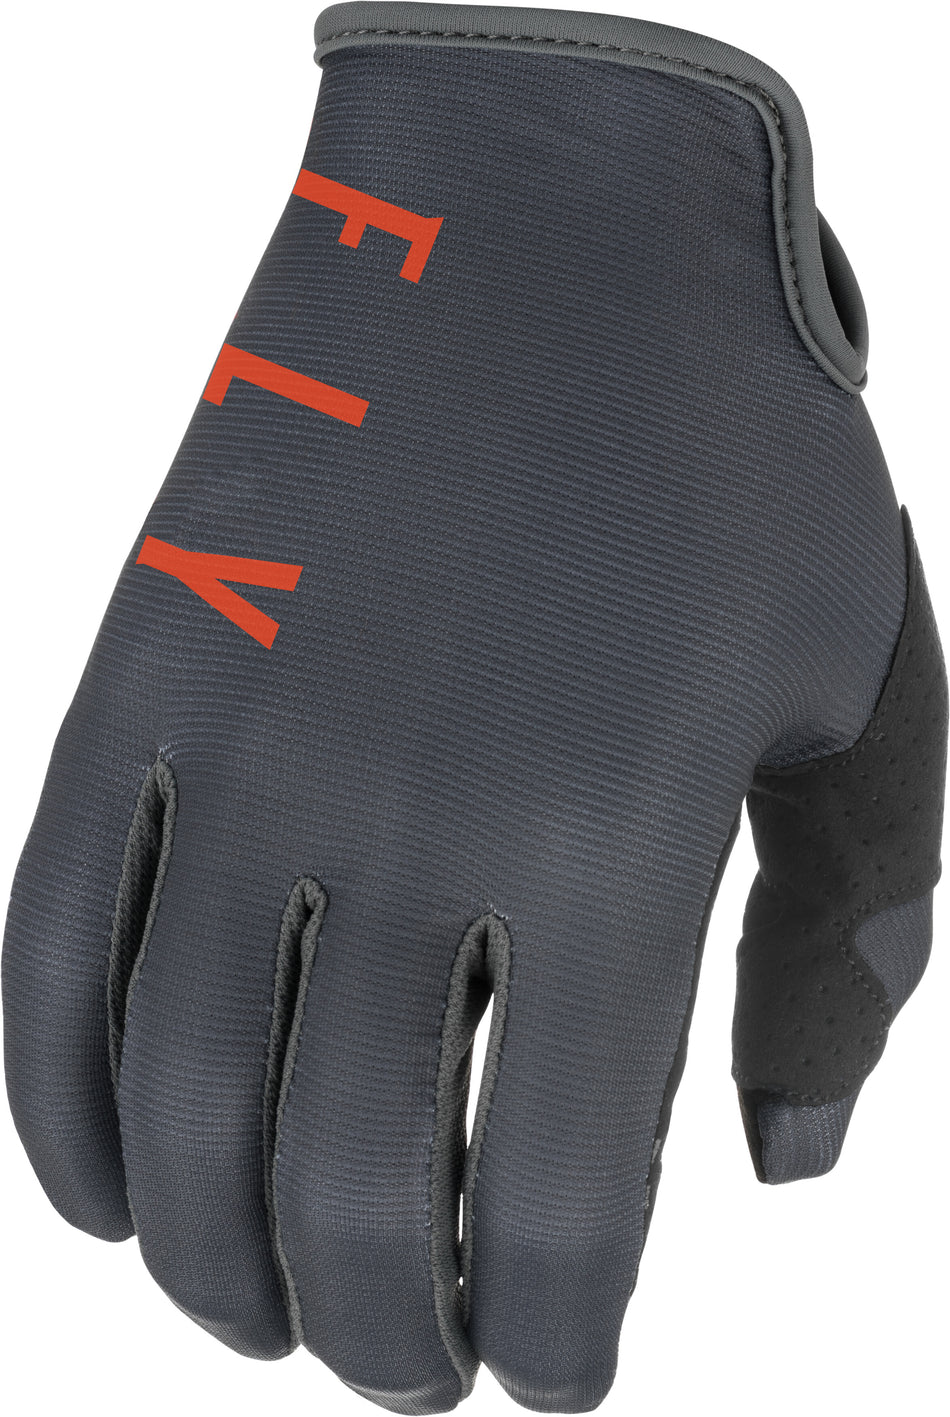 FLY RACING Lite Gloves Grey/Orange/Black Sz 09 374-71609